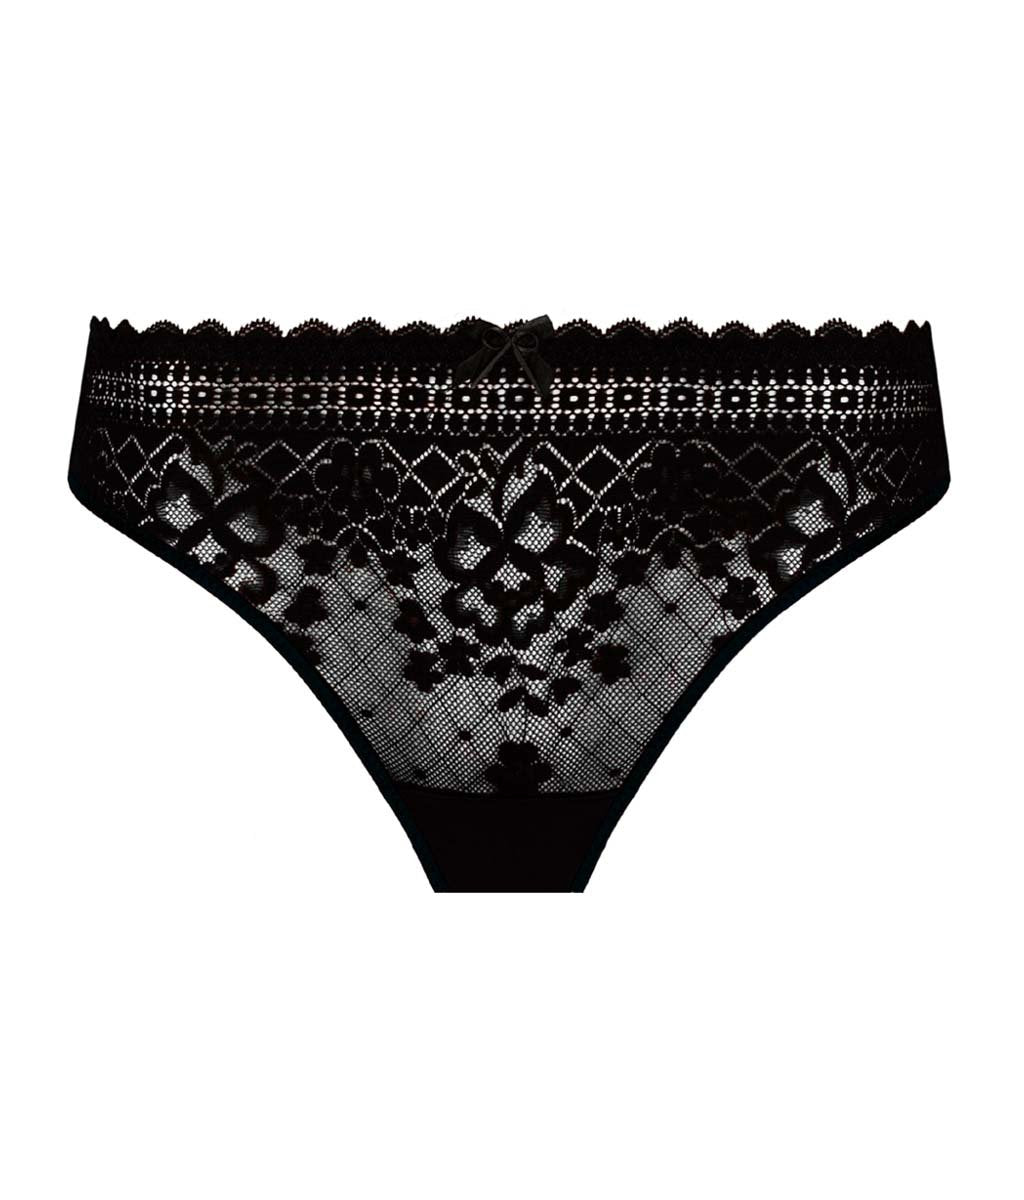 Empreinte 'Melody' (Black) Bikini Brief - Sandra Dee - Product Shot - Front